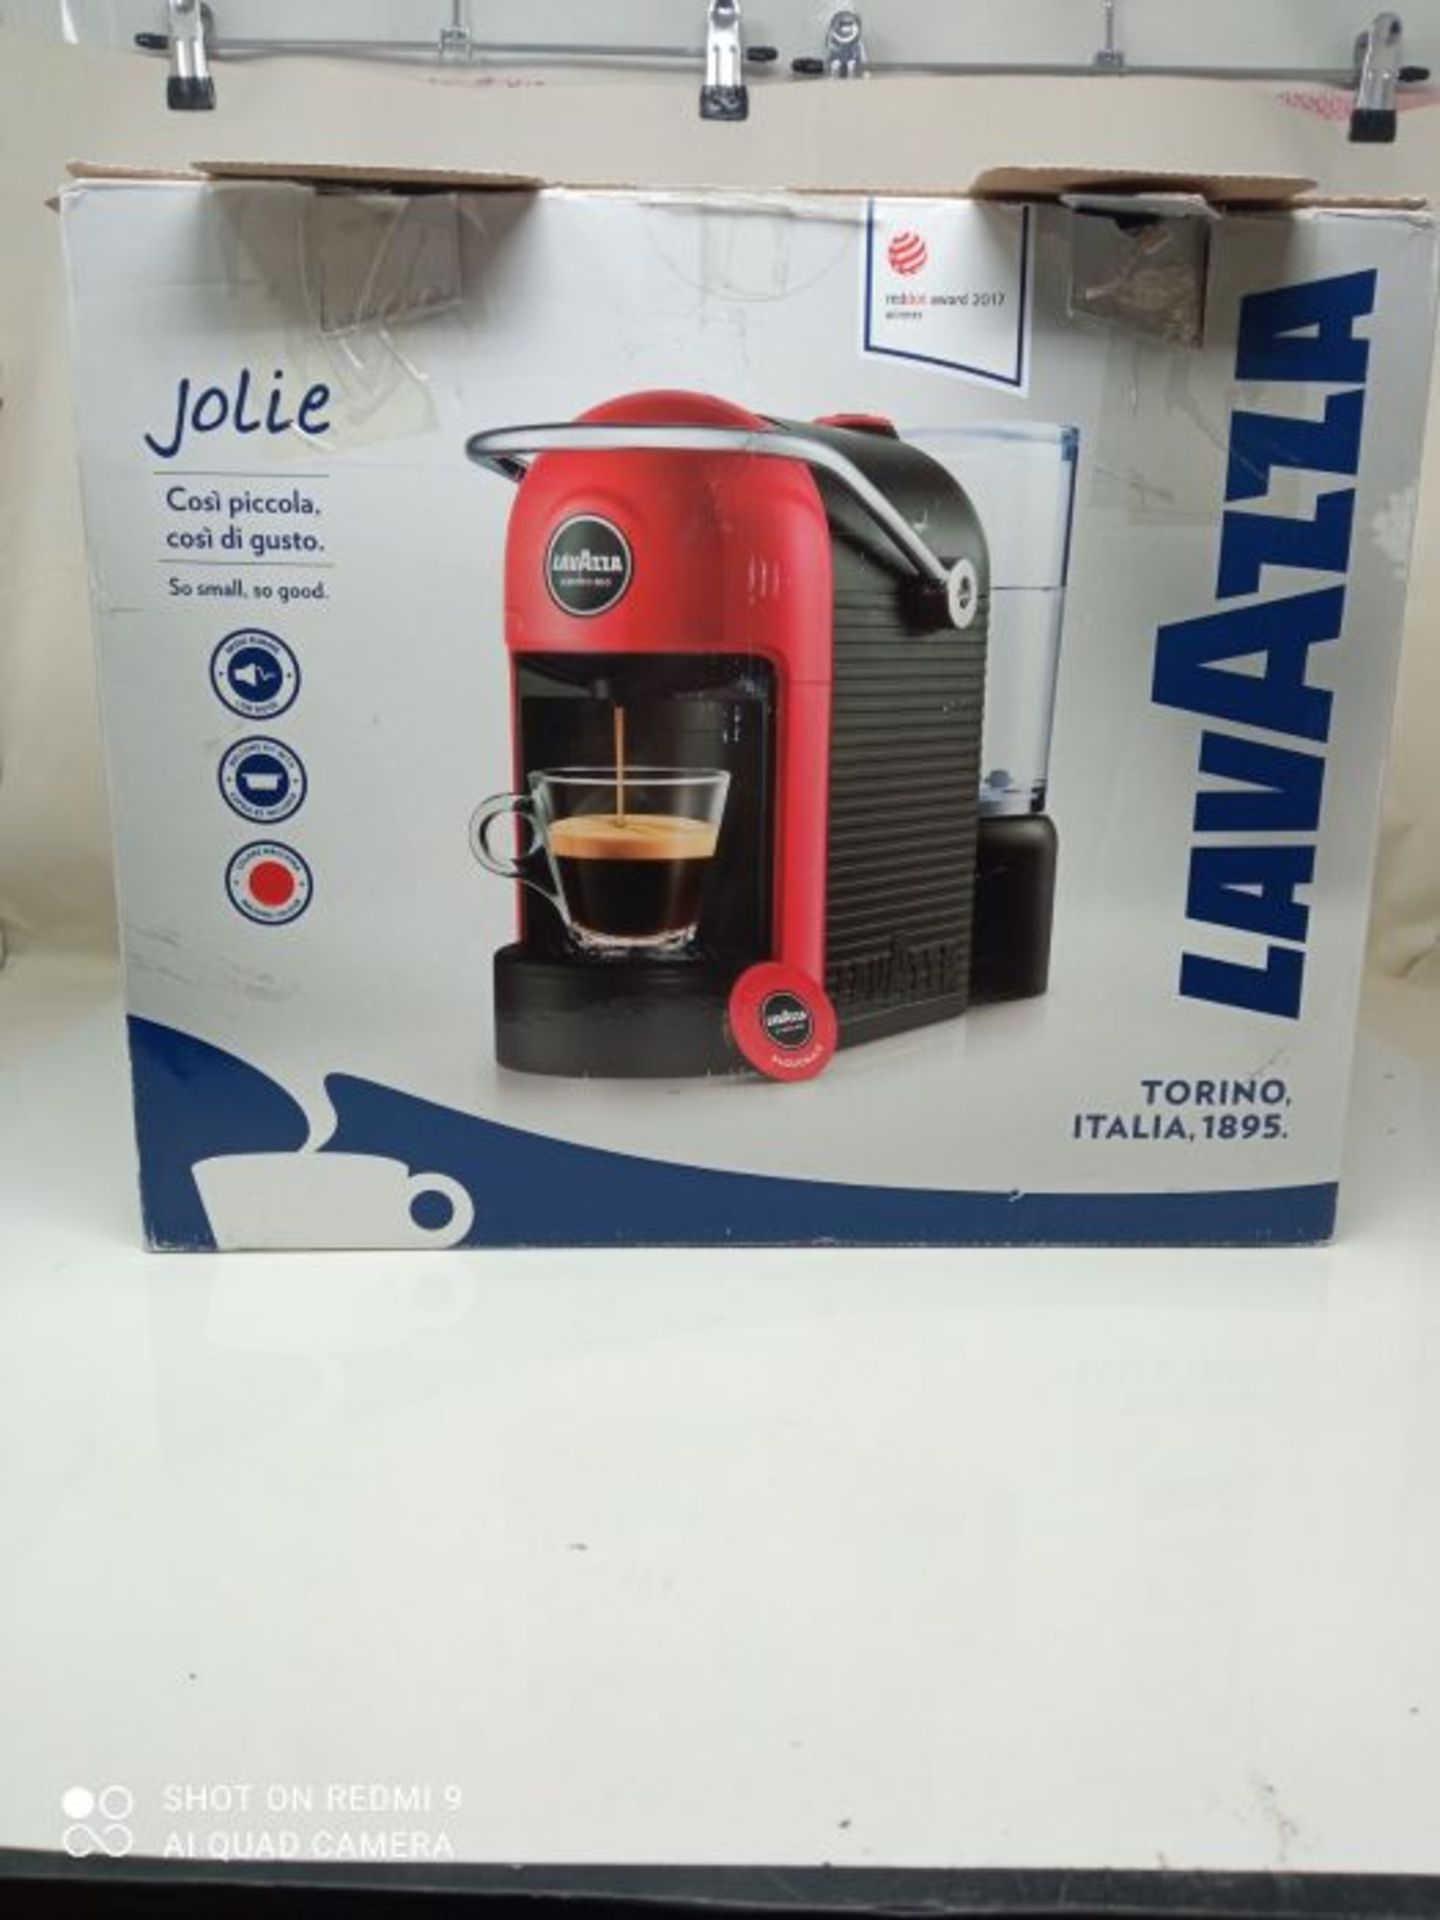 [CRACKED] Lavazza Jolie Freestanding semi-automática Coffee Machine in Capsules 0.6L - Image 2 of 3